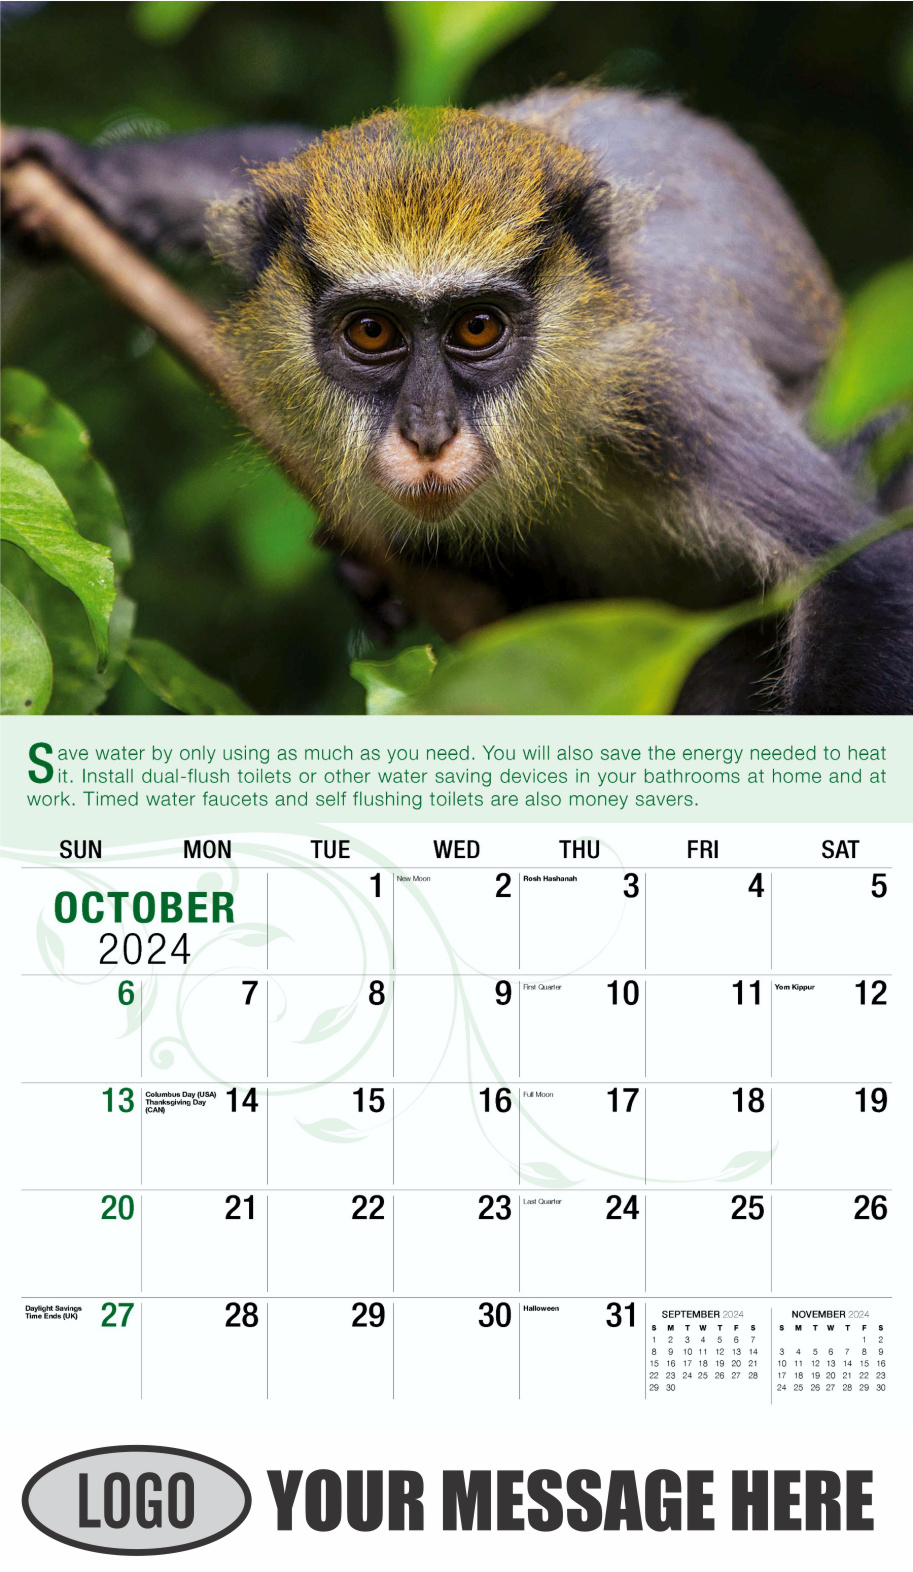 Go Green 2024 Business Promotion Calendar - October